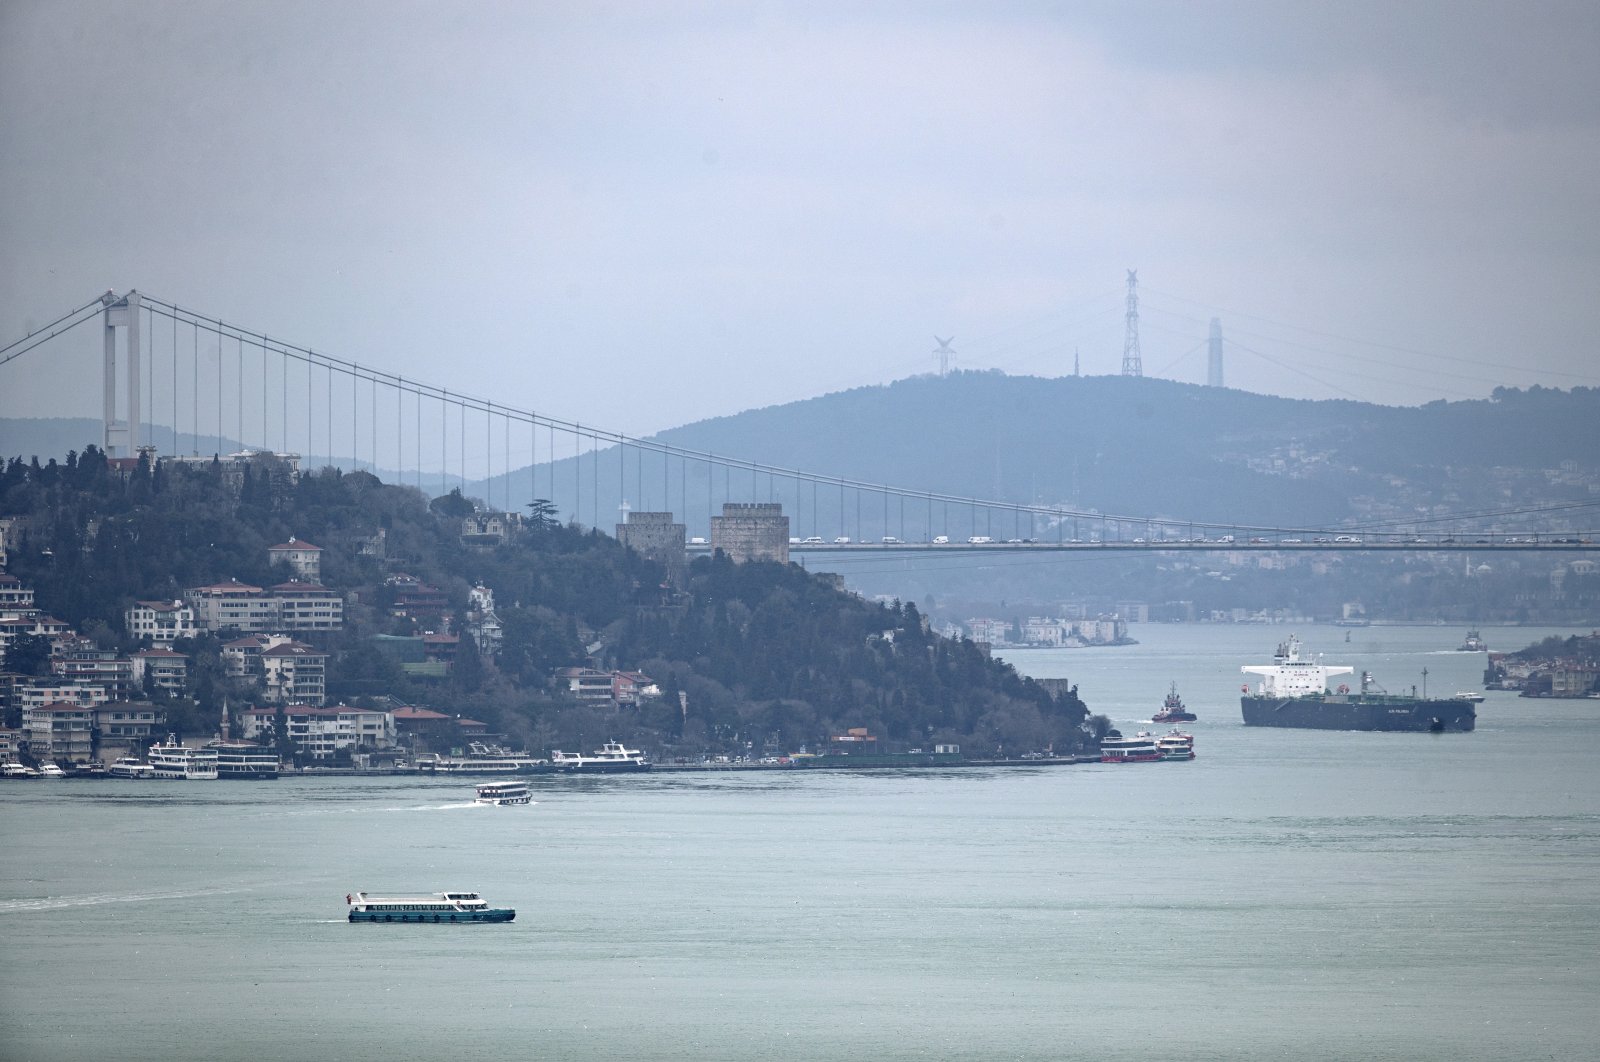 A cargo ship sails under the Fatih Sultan Mehmet Bridge on the Bosporus in Istanbul, Turkey, March 1, 2022. (EPA)